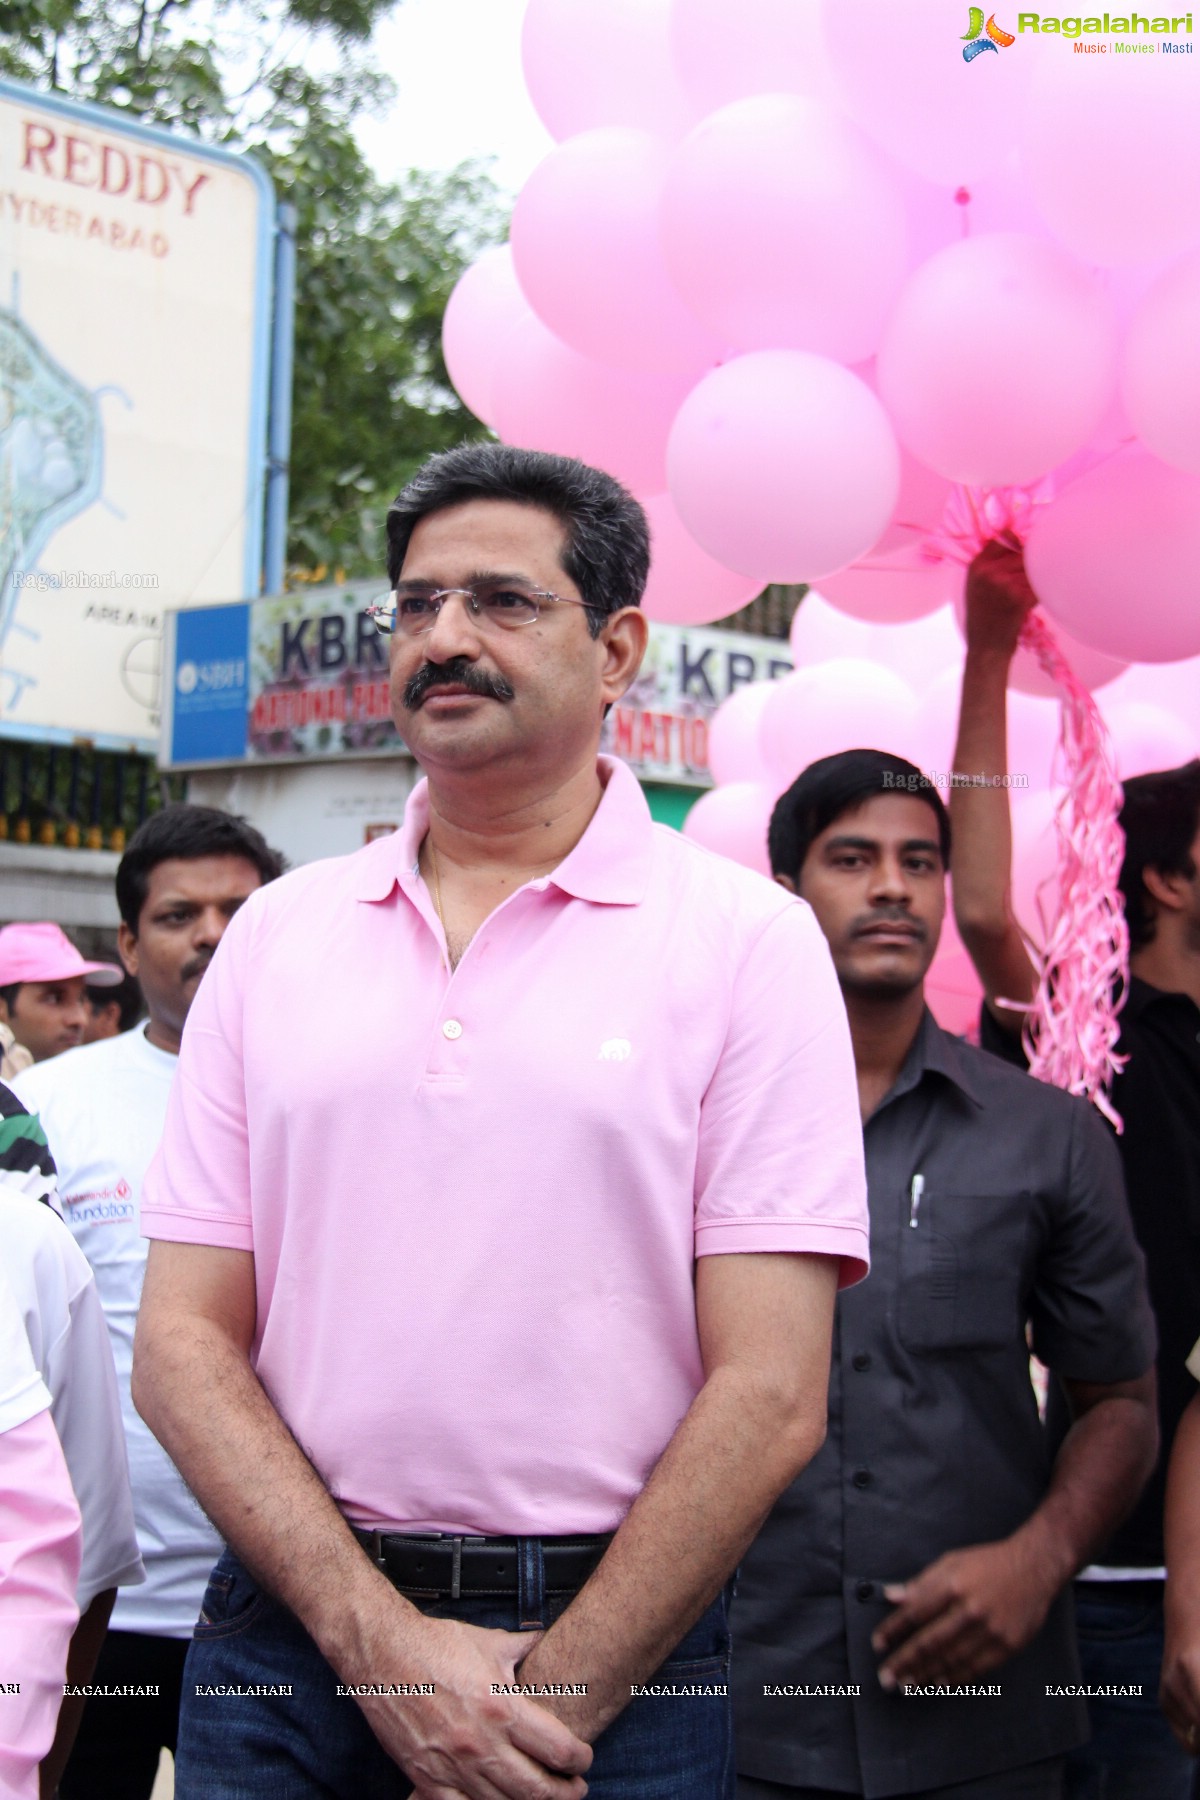 Pink Ribbon Walk 2013 by Ushalakshmi Breast Cancer Foundation at KBR Park, Hyderabad